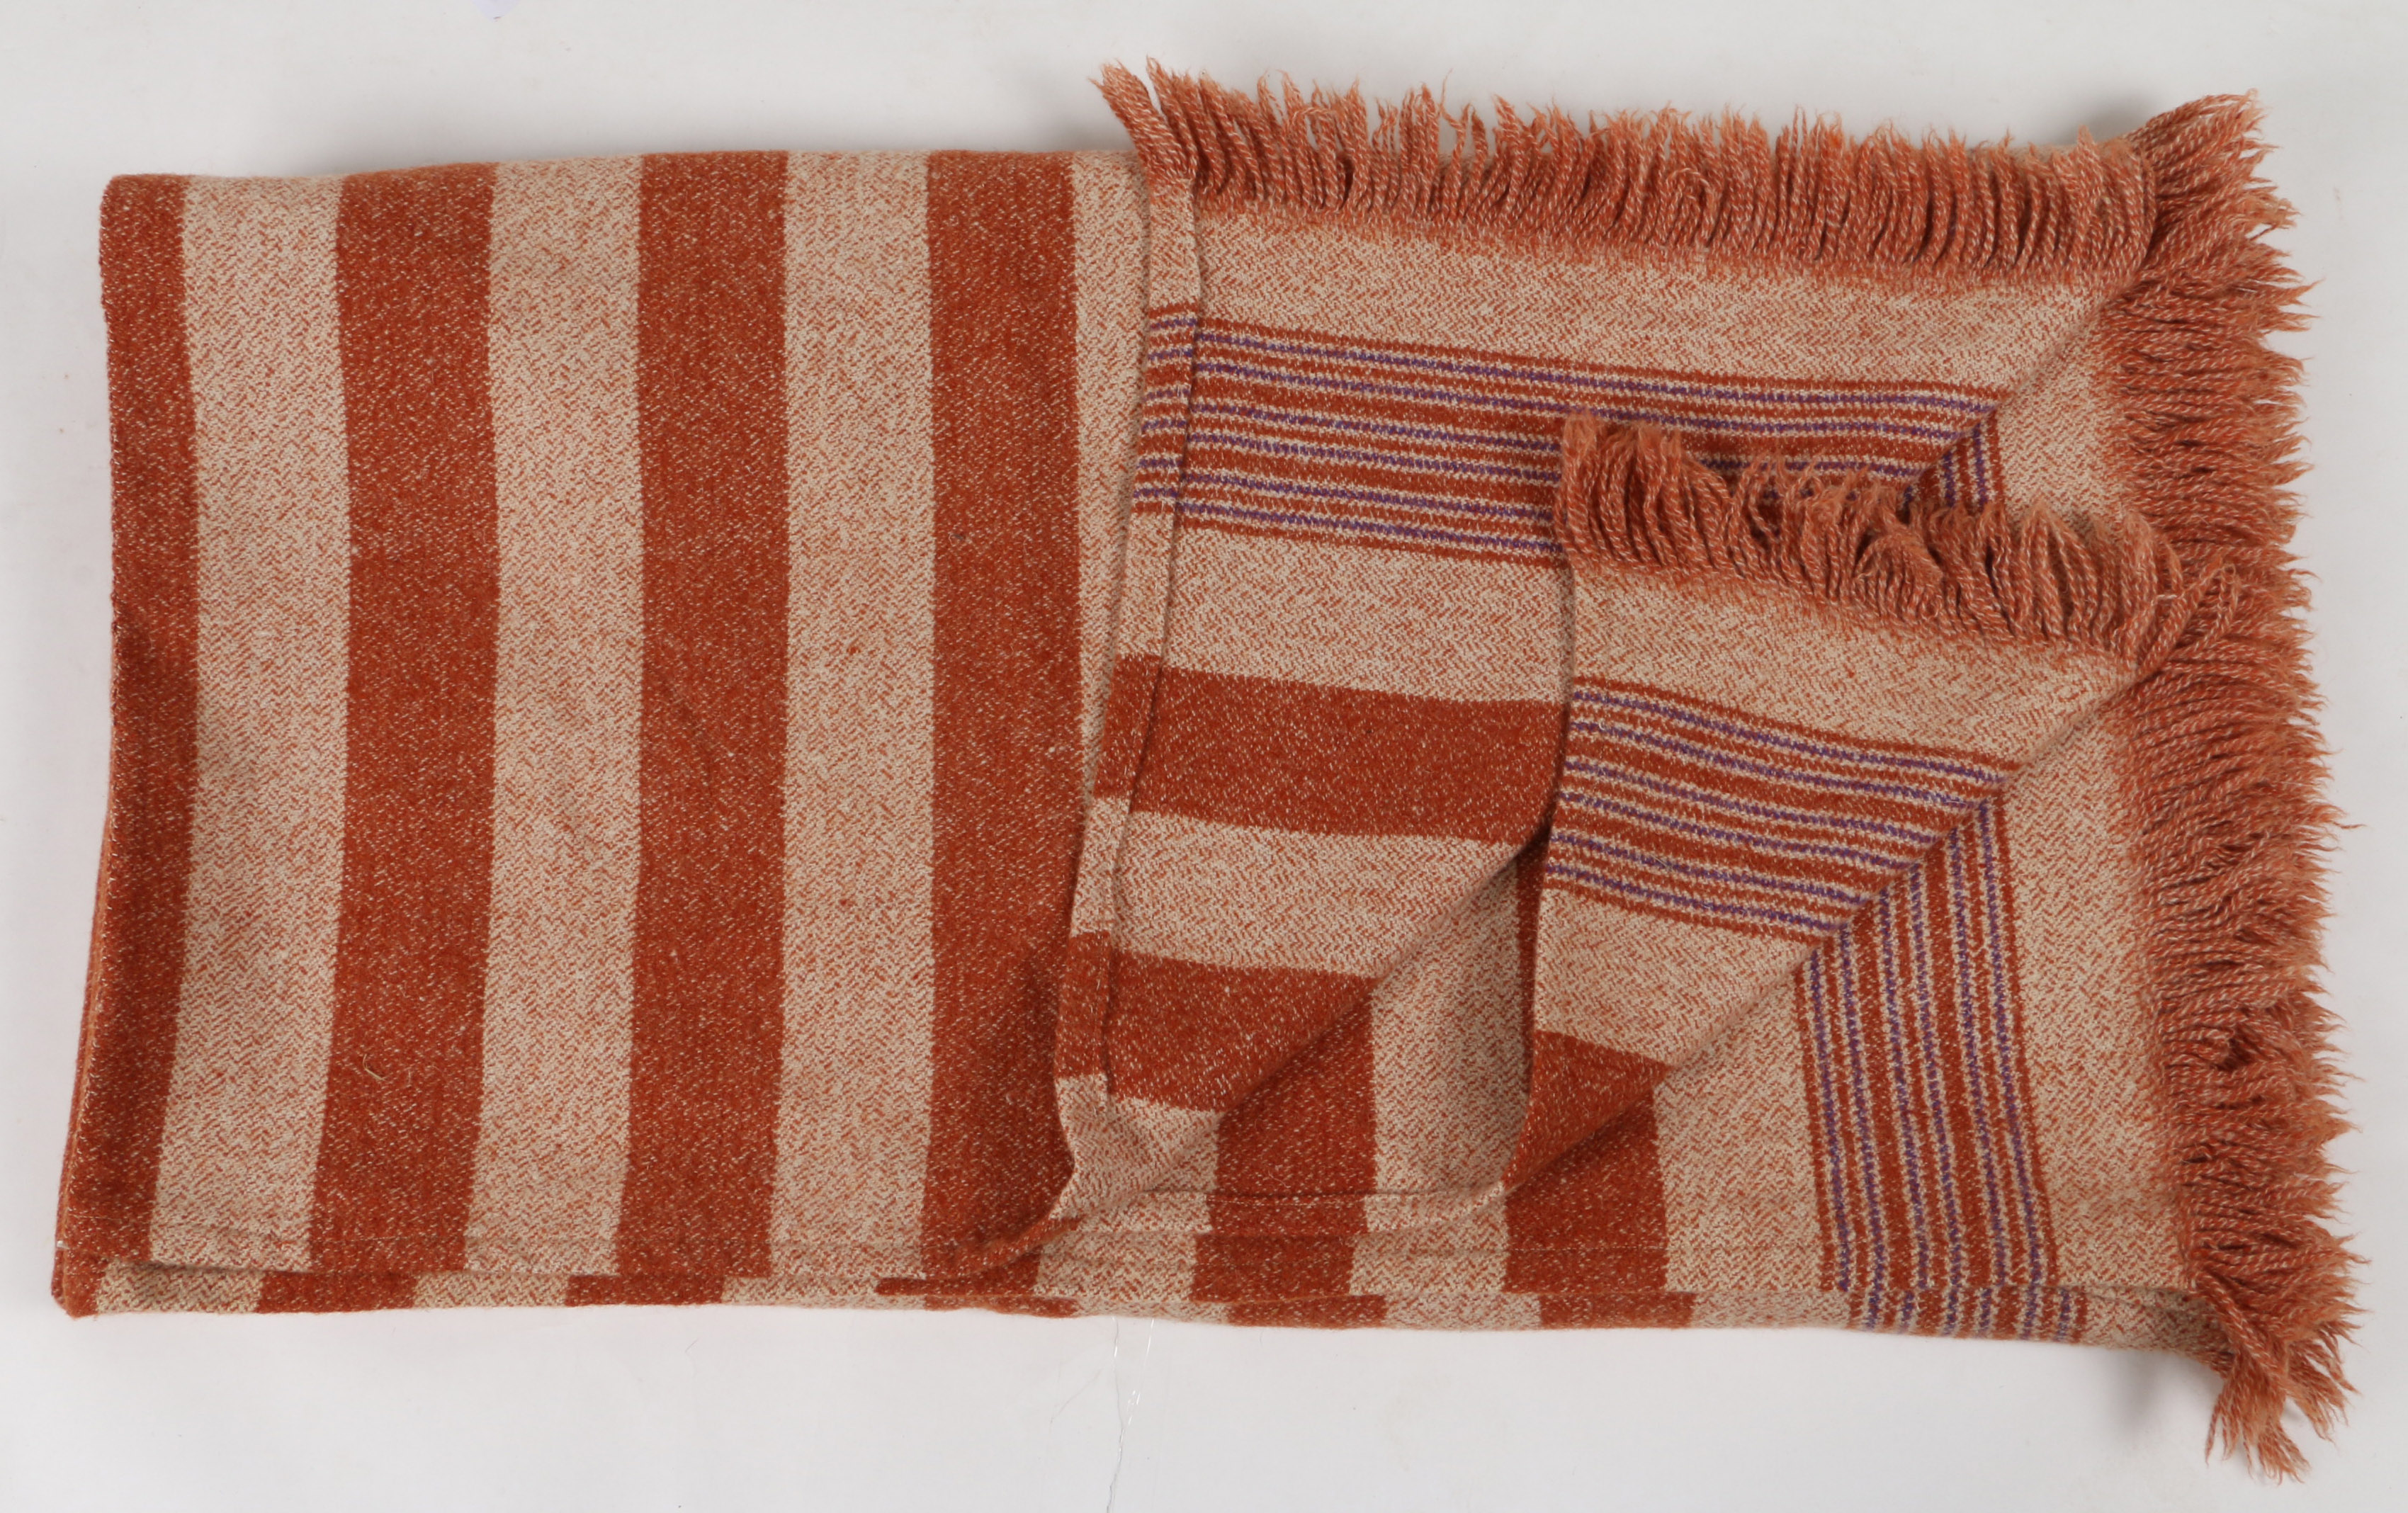 A Welsh blanket, orange bands of varying tones, 165cm x 200cm approximately